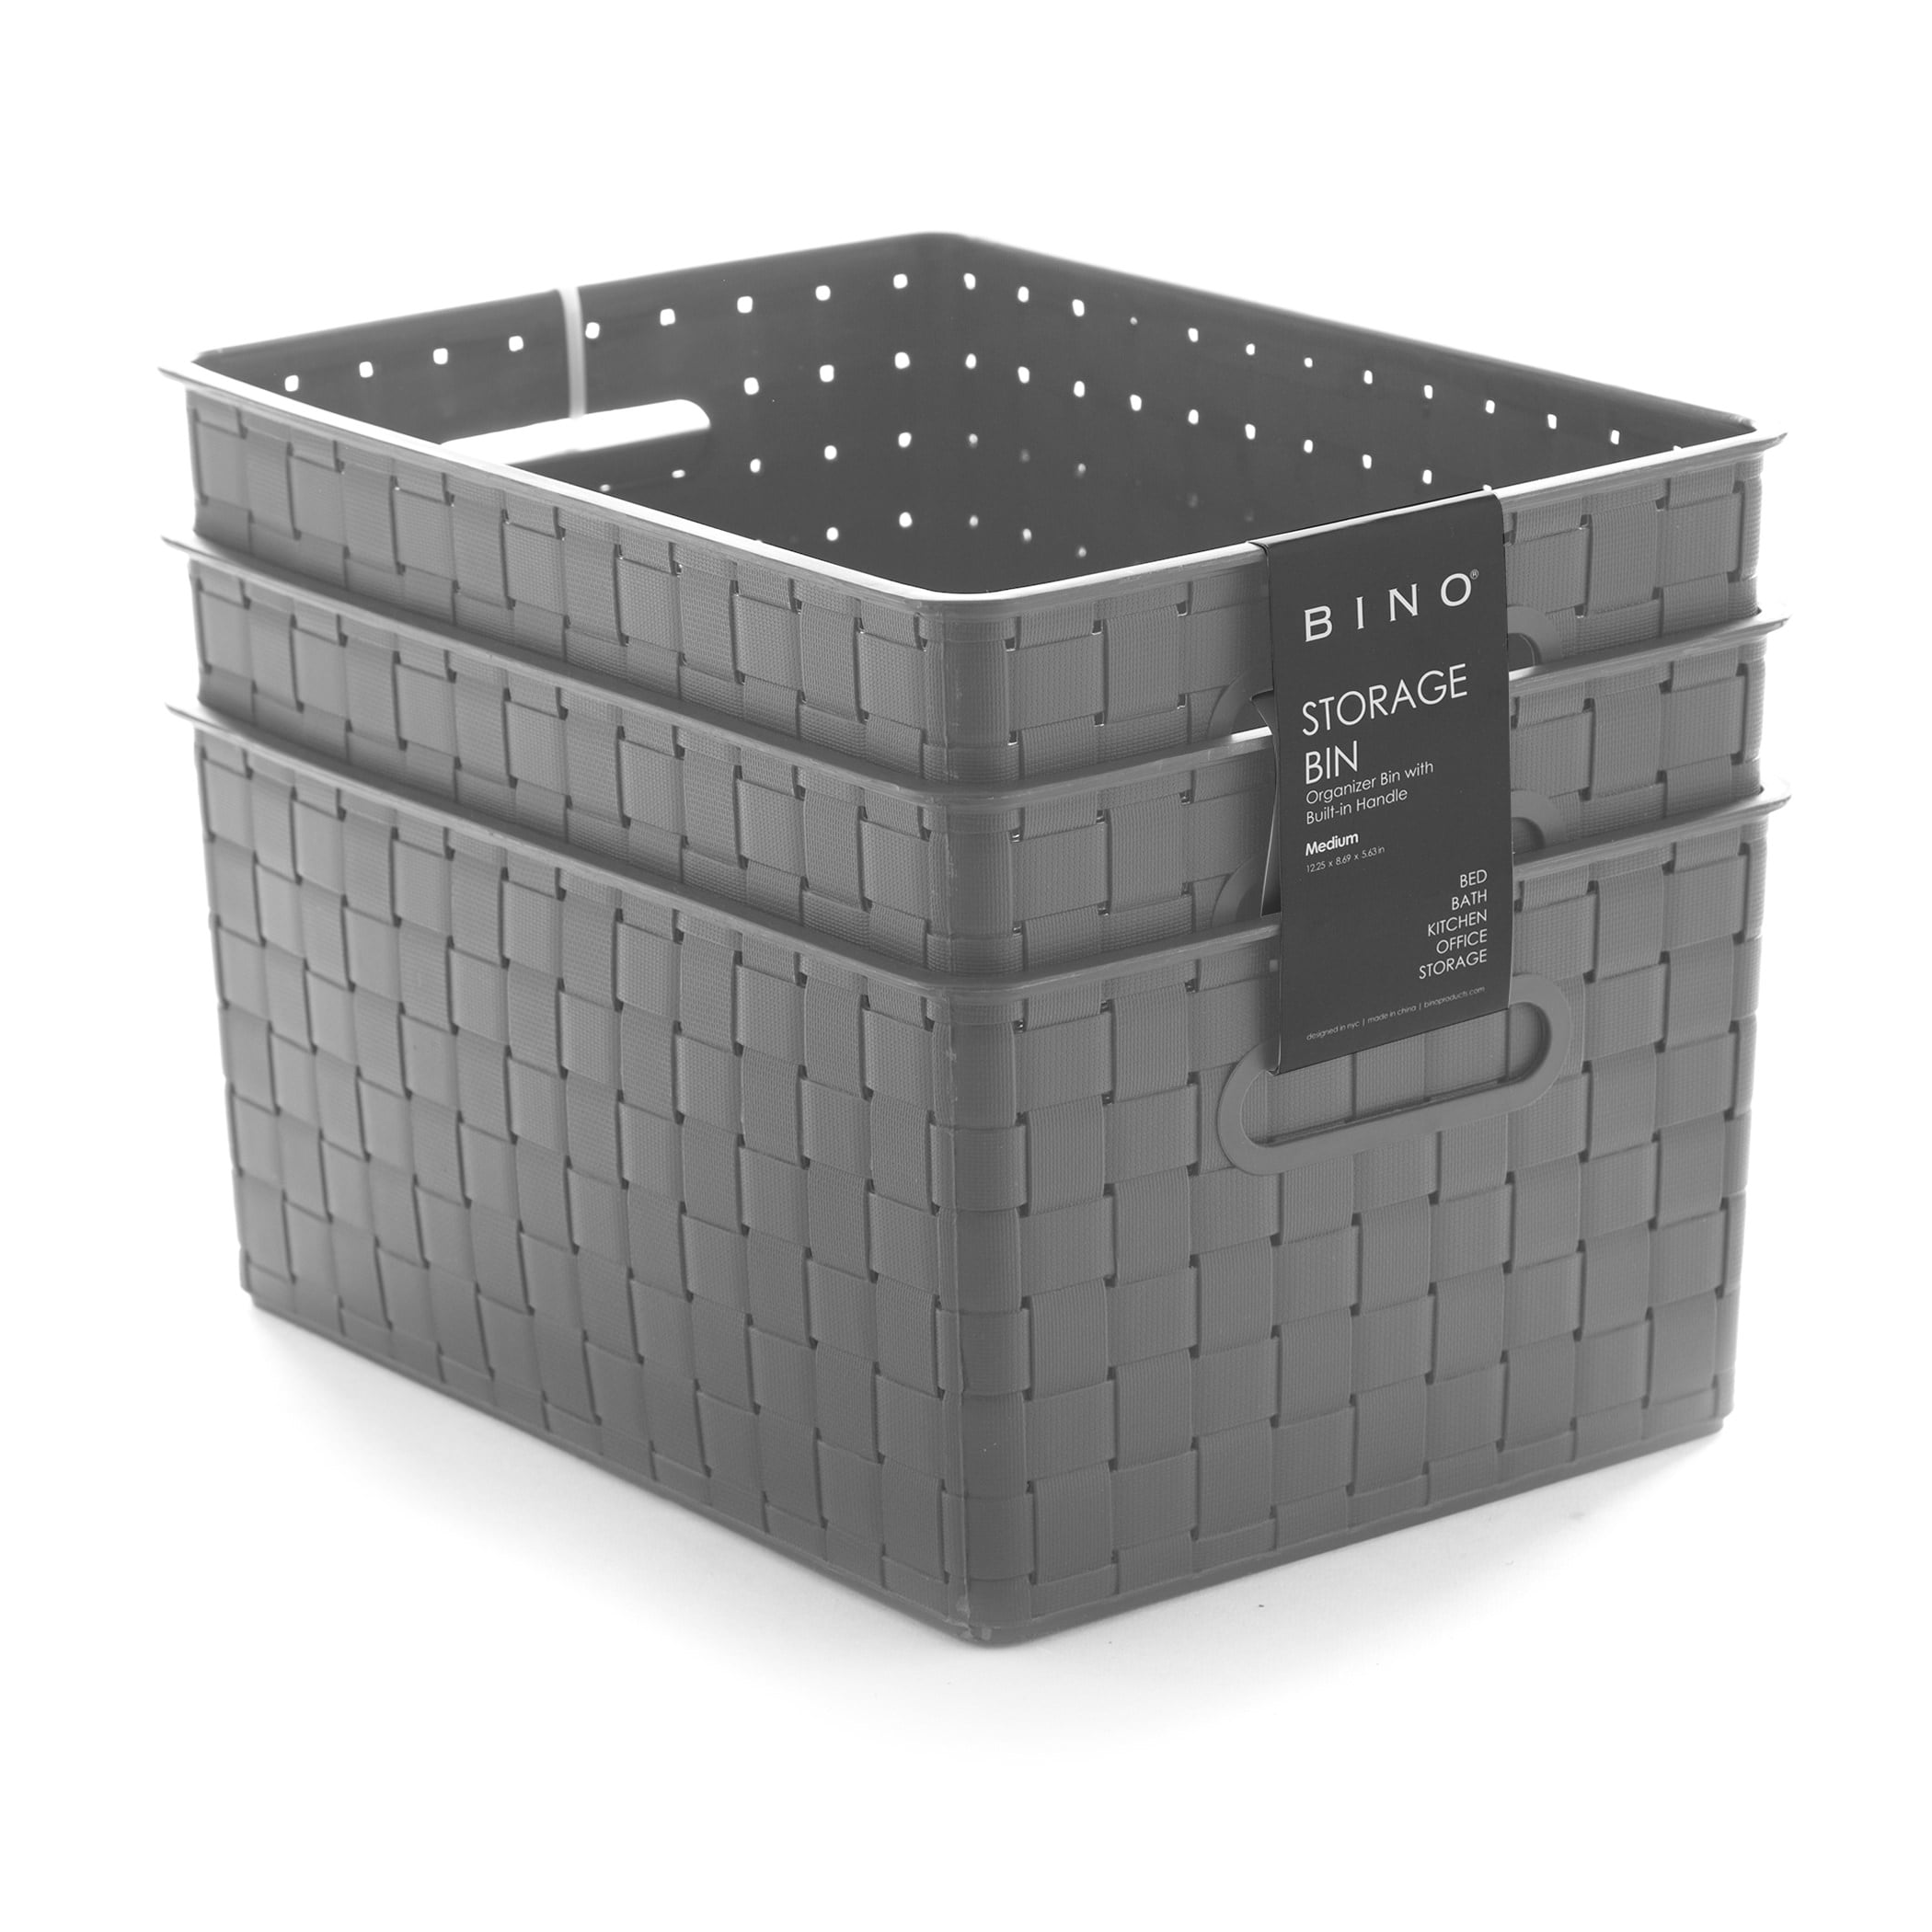 BINO Woven Plastic Storage Basket, Large– 2 PACK (Black) 